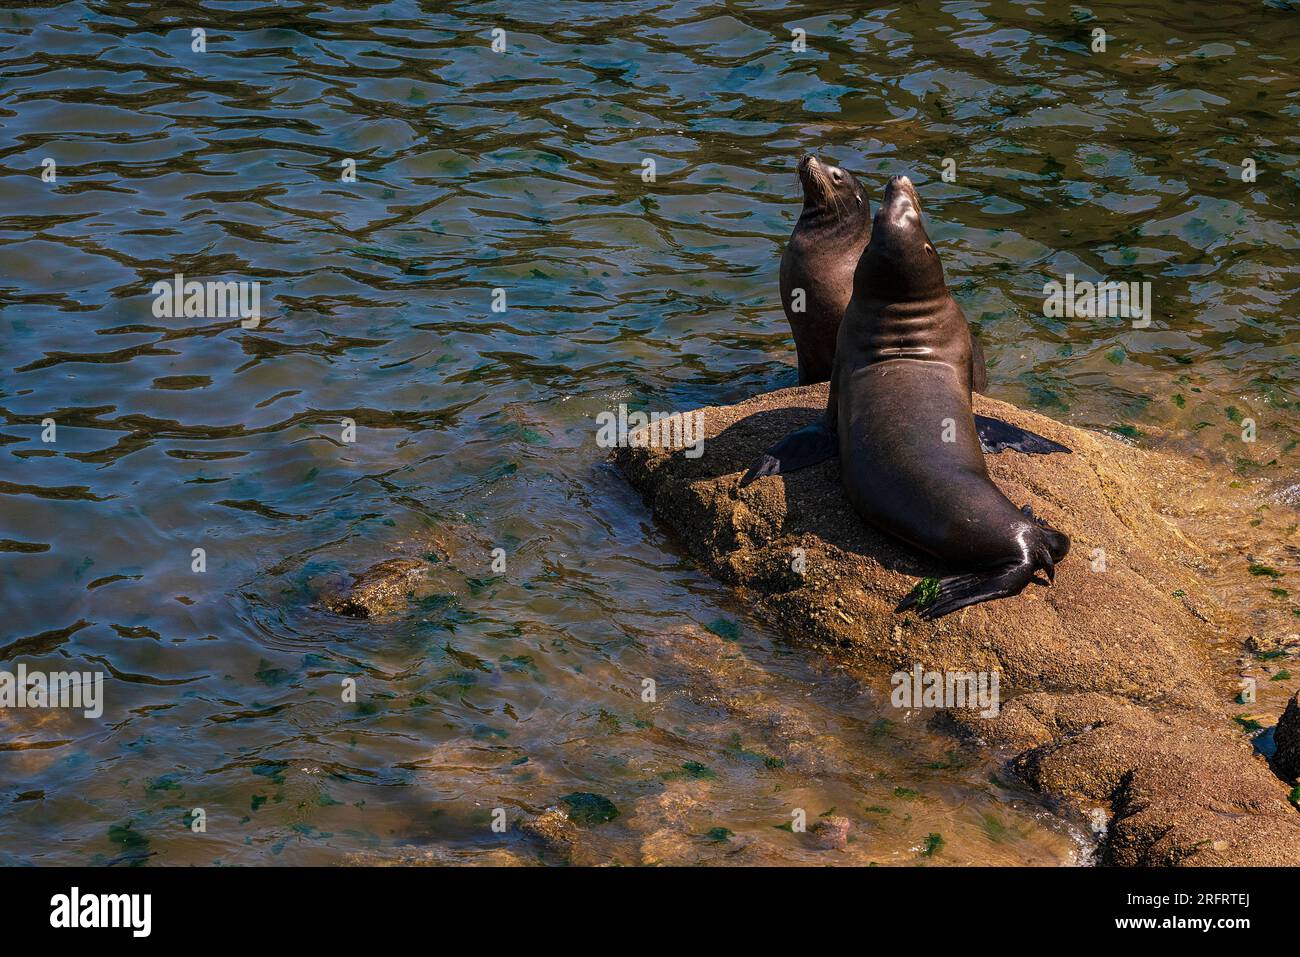 California sea lions (Zalophus californianus) at Fisherman’s Wharf in Monterey, California Stock Photo